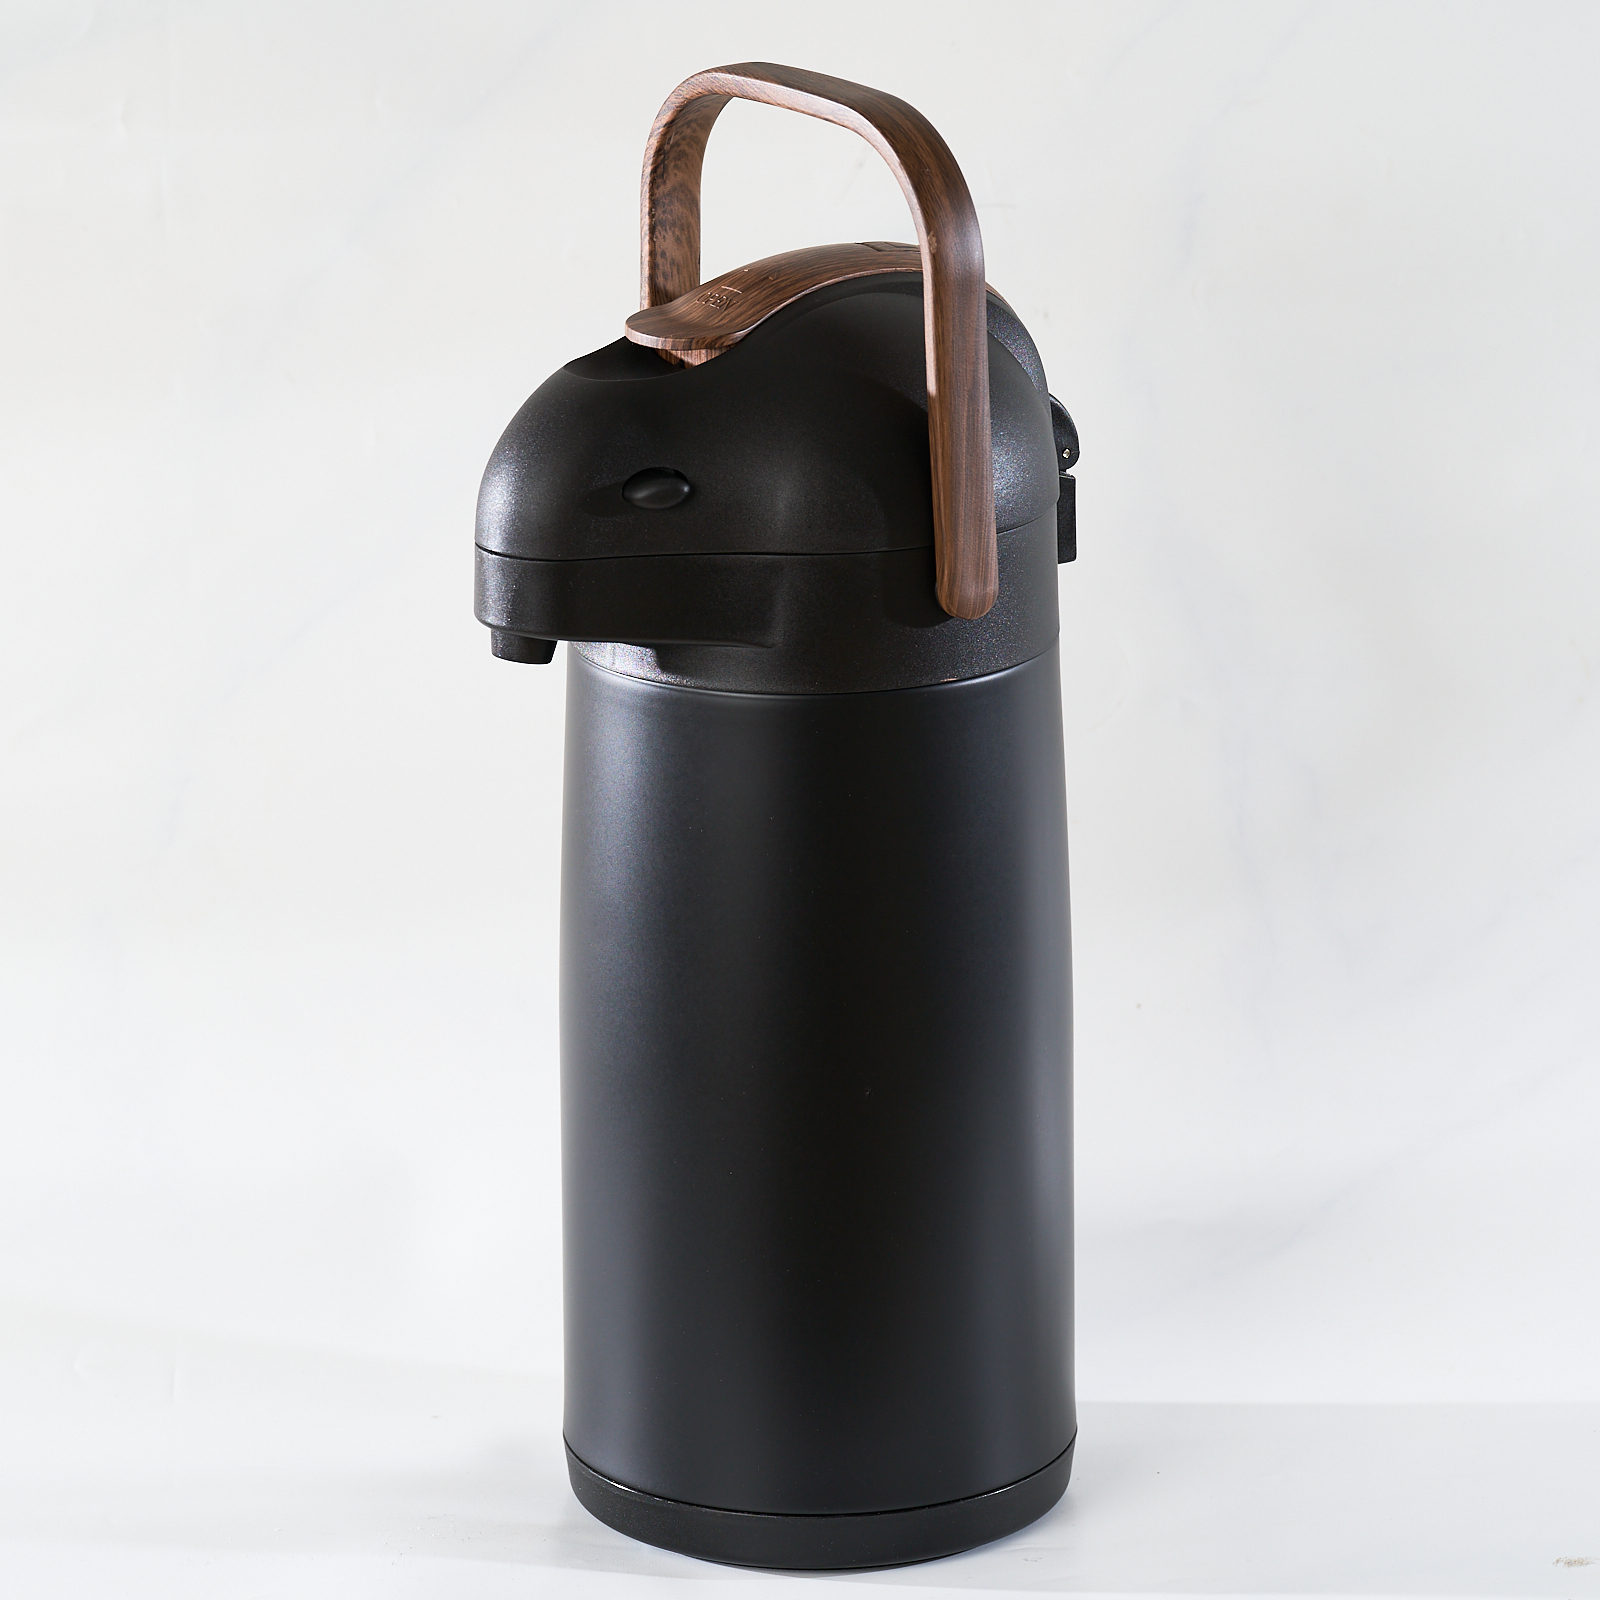 DSC06068 1 - Amazon hot sale wooden airpot coffee dispenser with pump 3 liter